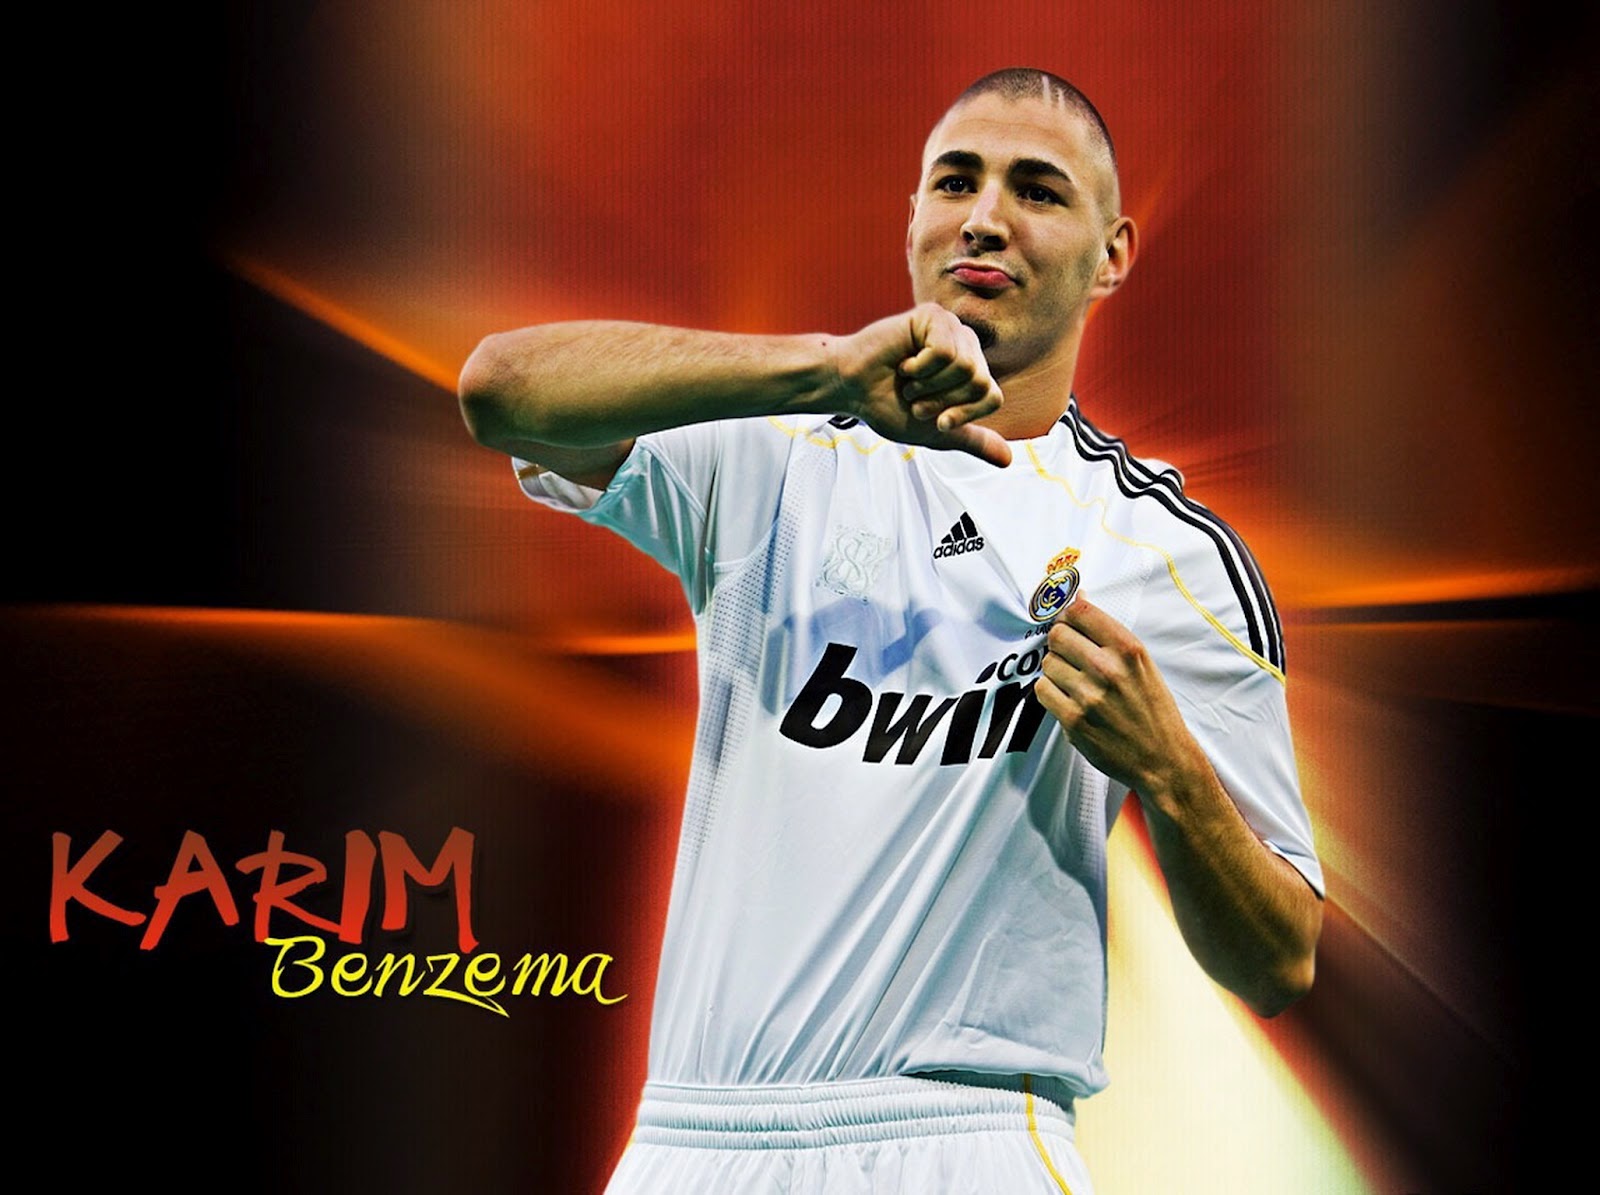 Download Karim Benzema Wallpapers In HD For Desktop Or Gadget